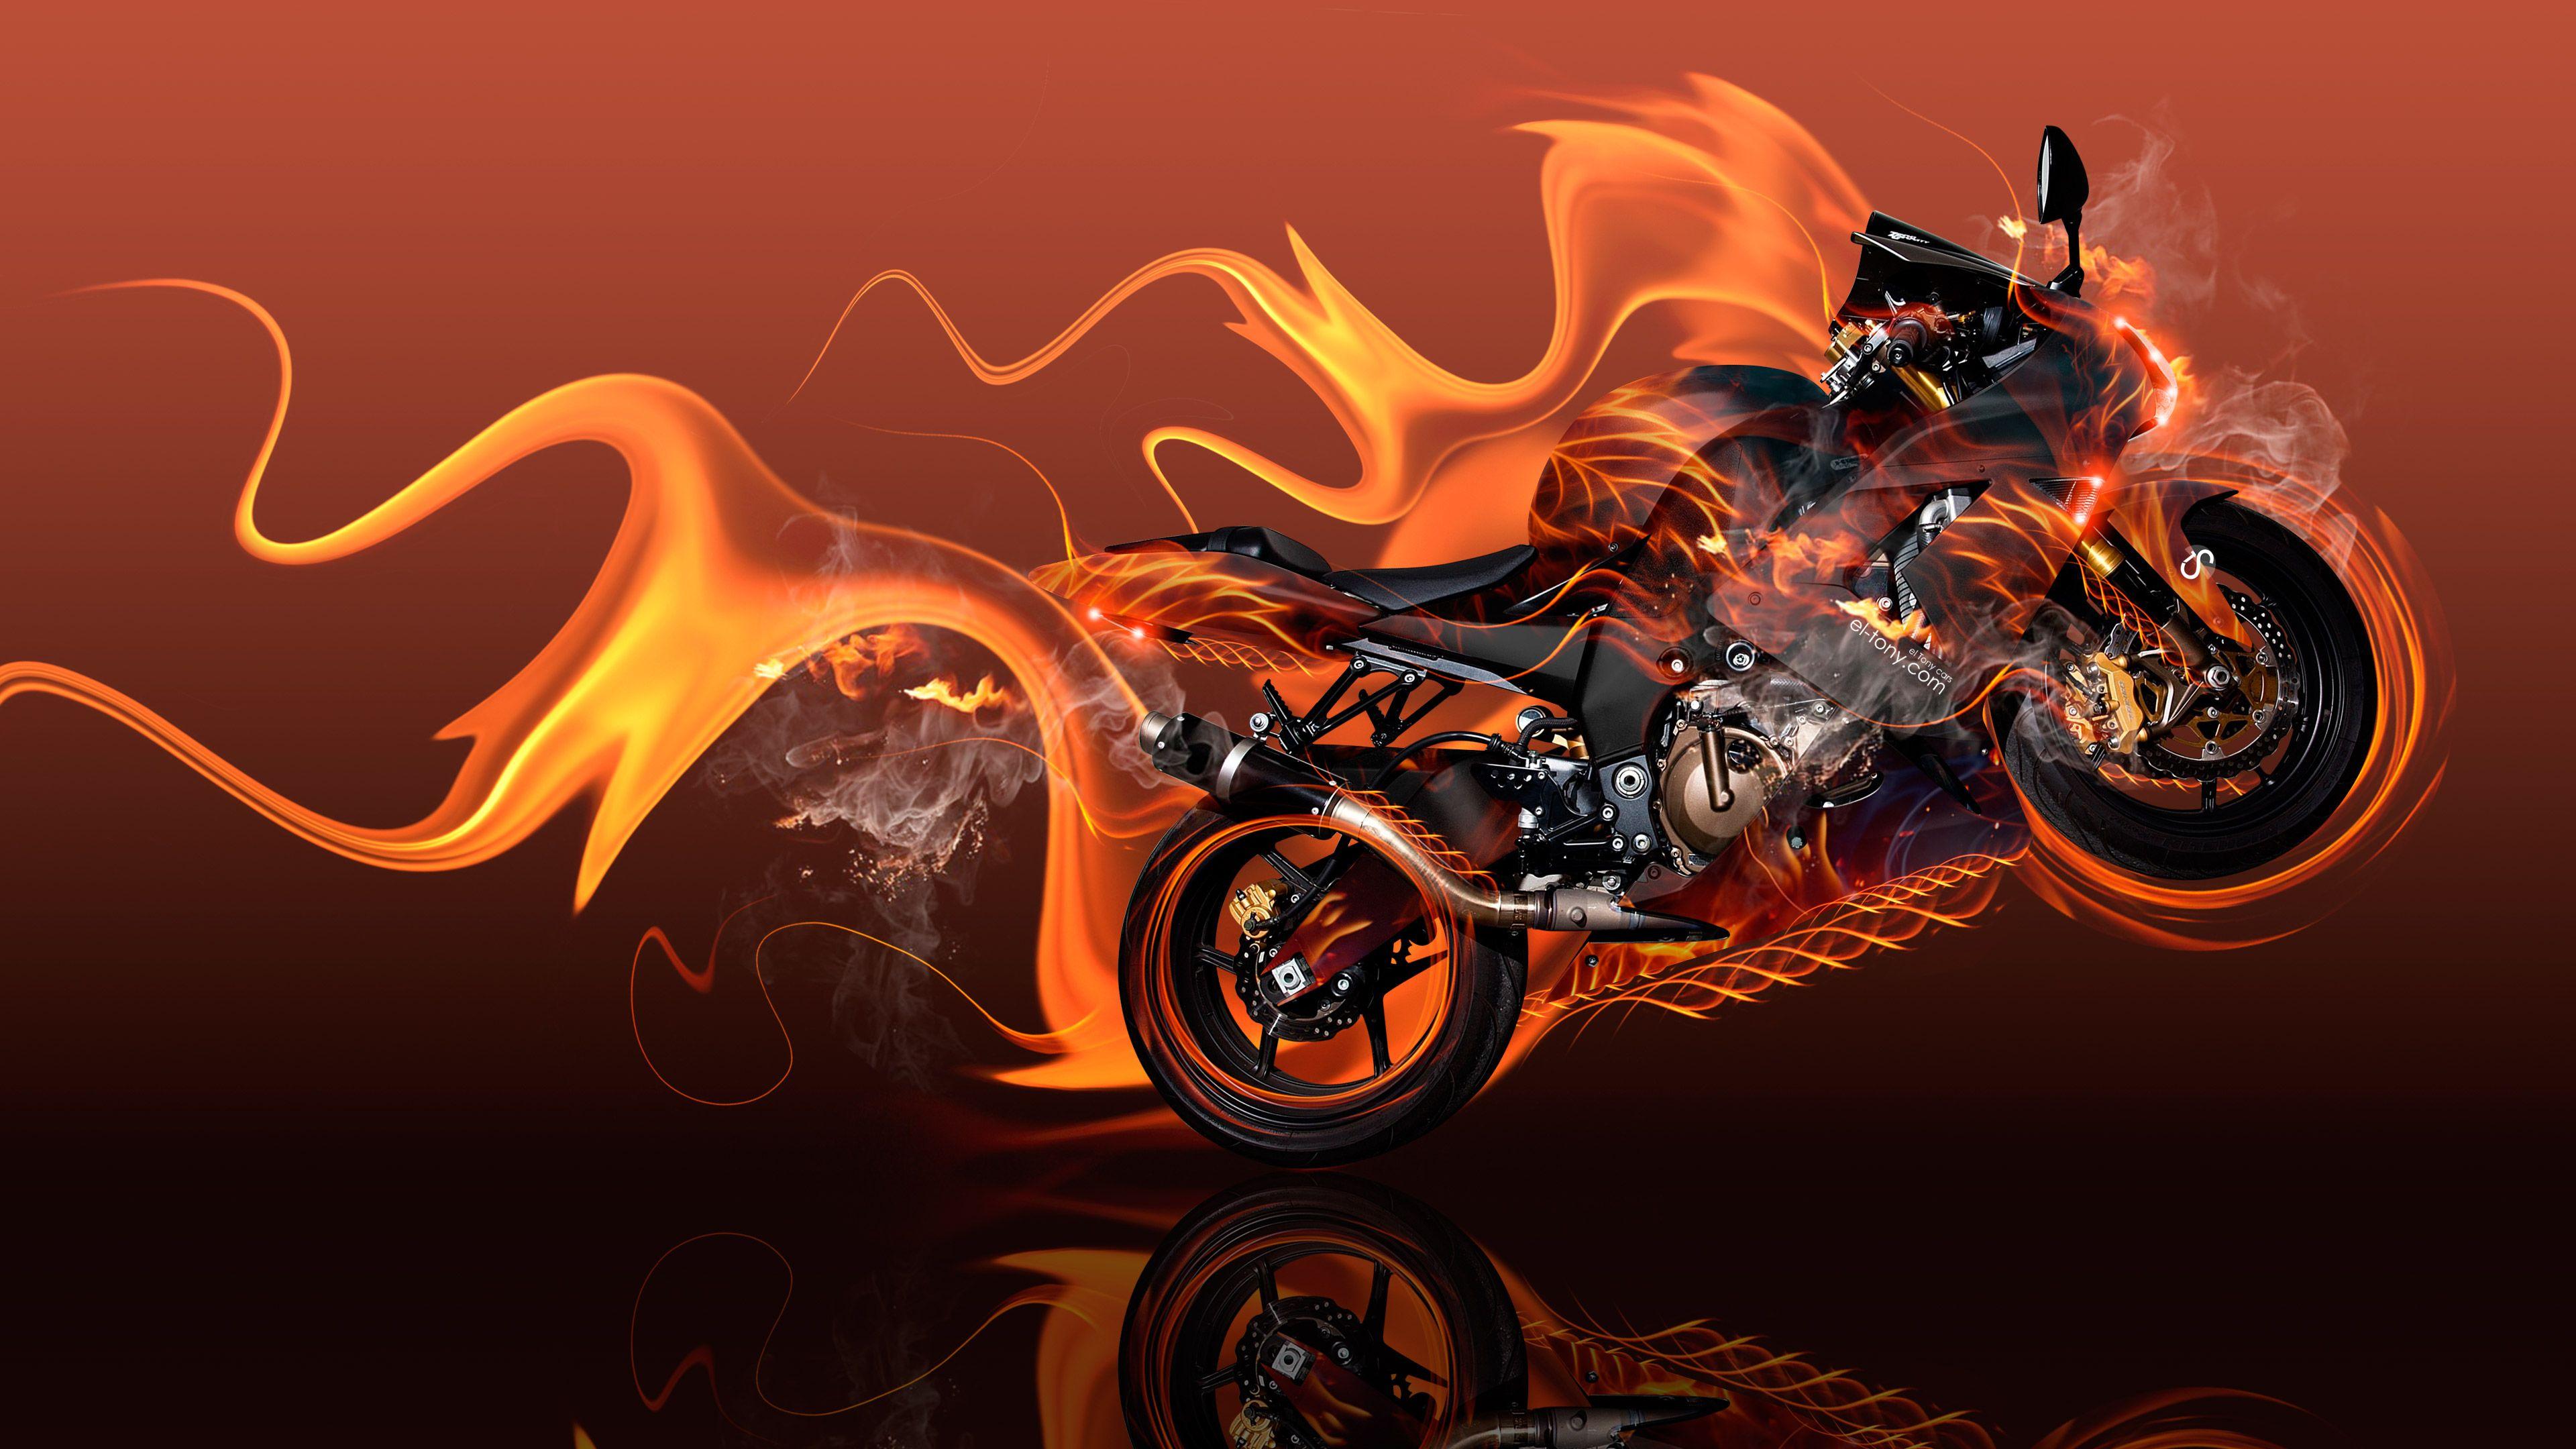 Moto Kawasaki Side Super Fire Abstract Bike 2017 Wallpaper 4K